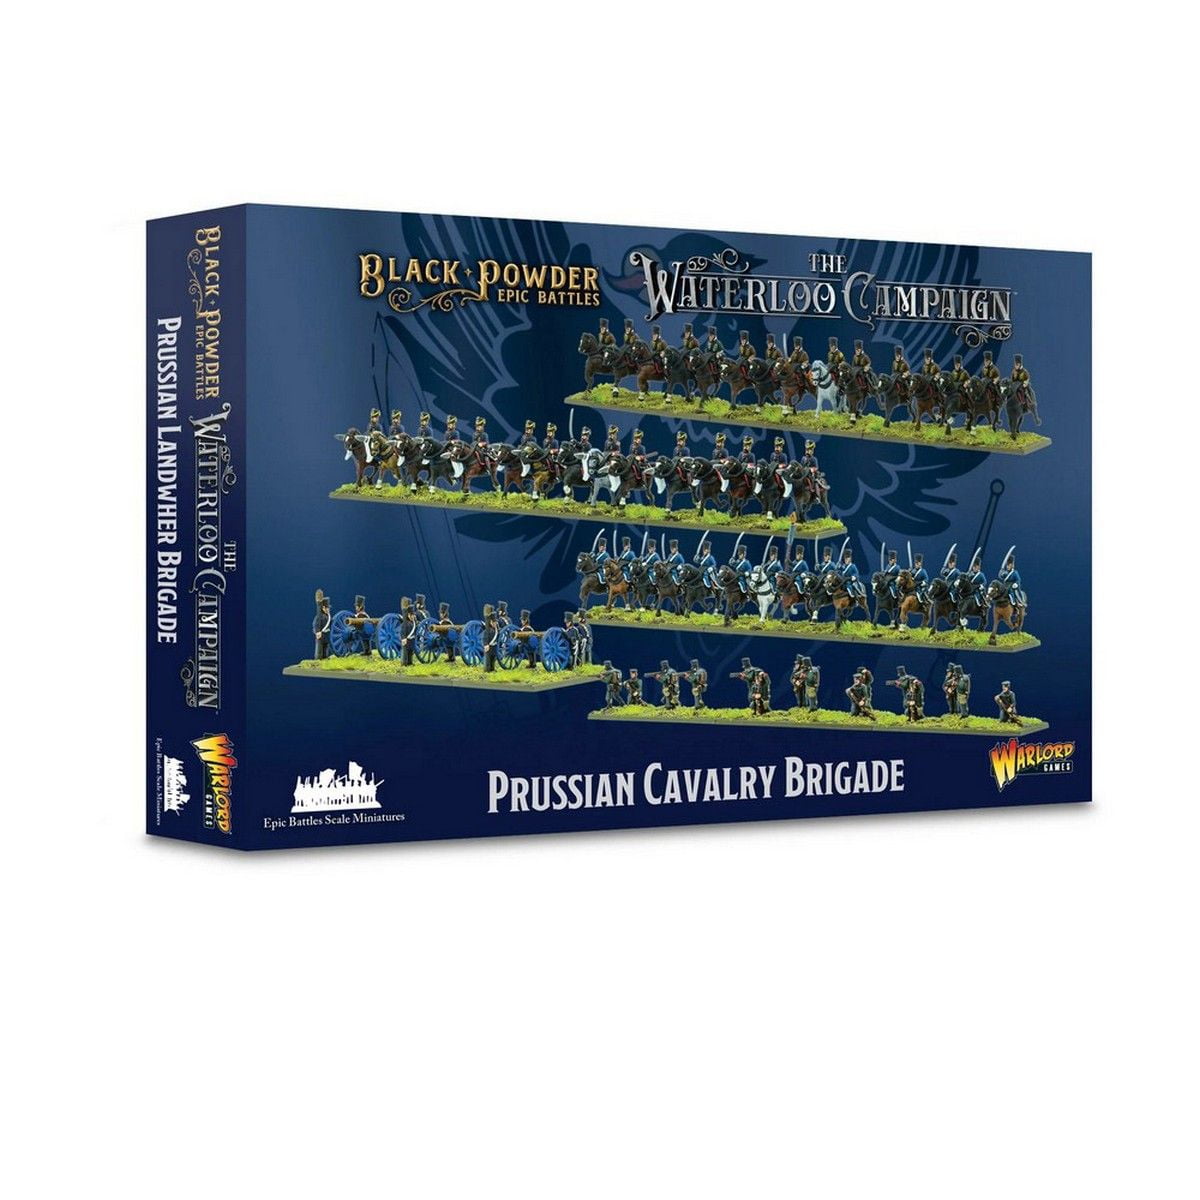 Black Powder Epic Battles: Waterloo - Prussian Cavalry Brigade